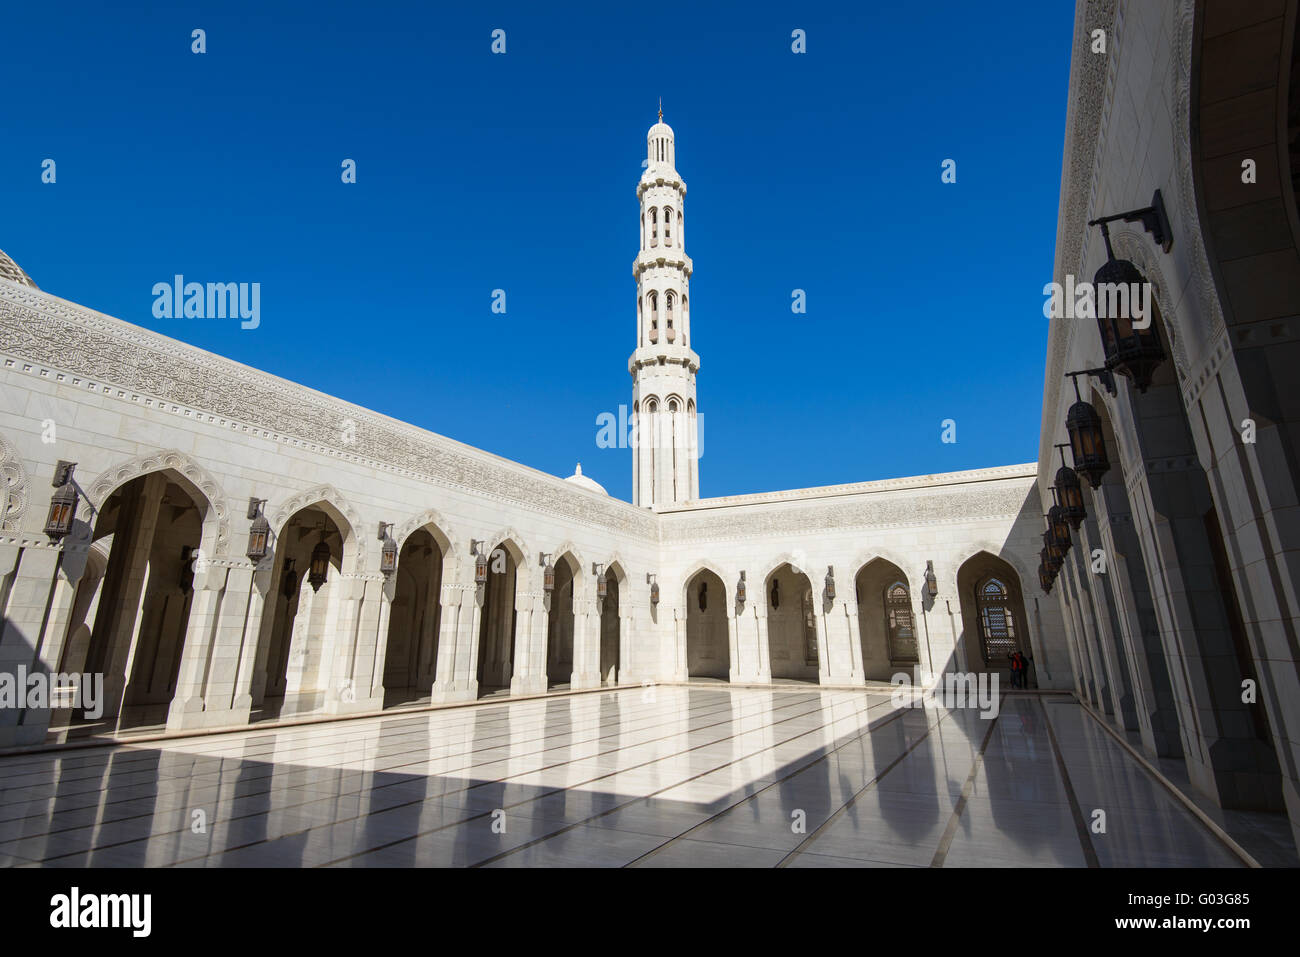 Sultan Qaboos Grand Mosque, Muscat, Oman. Stock Photo